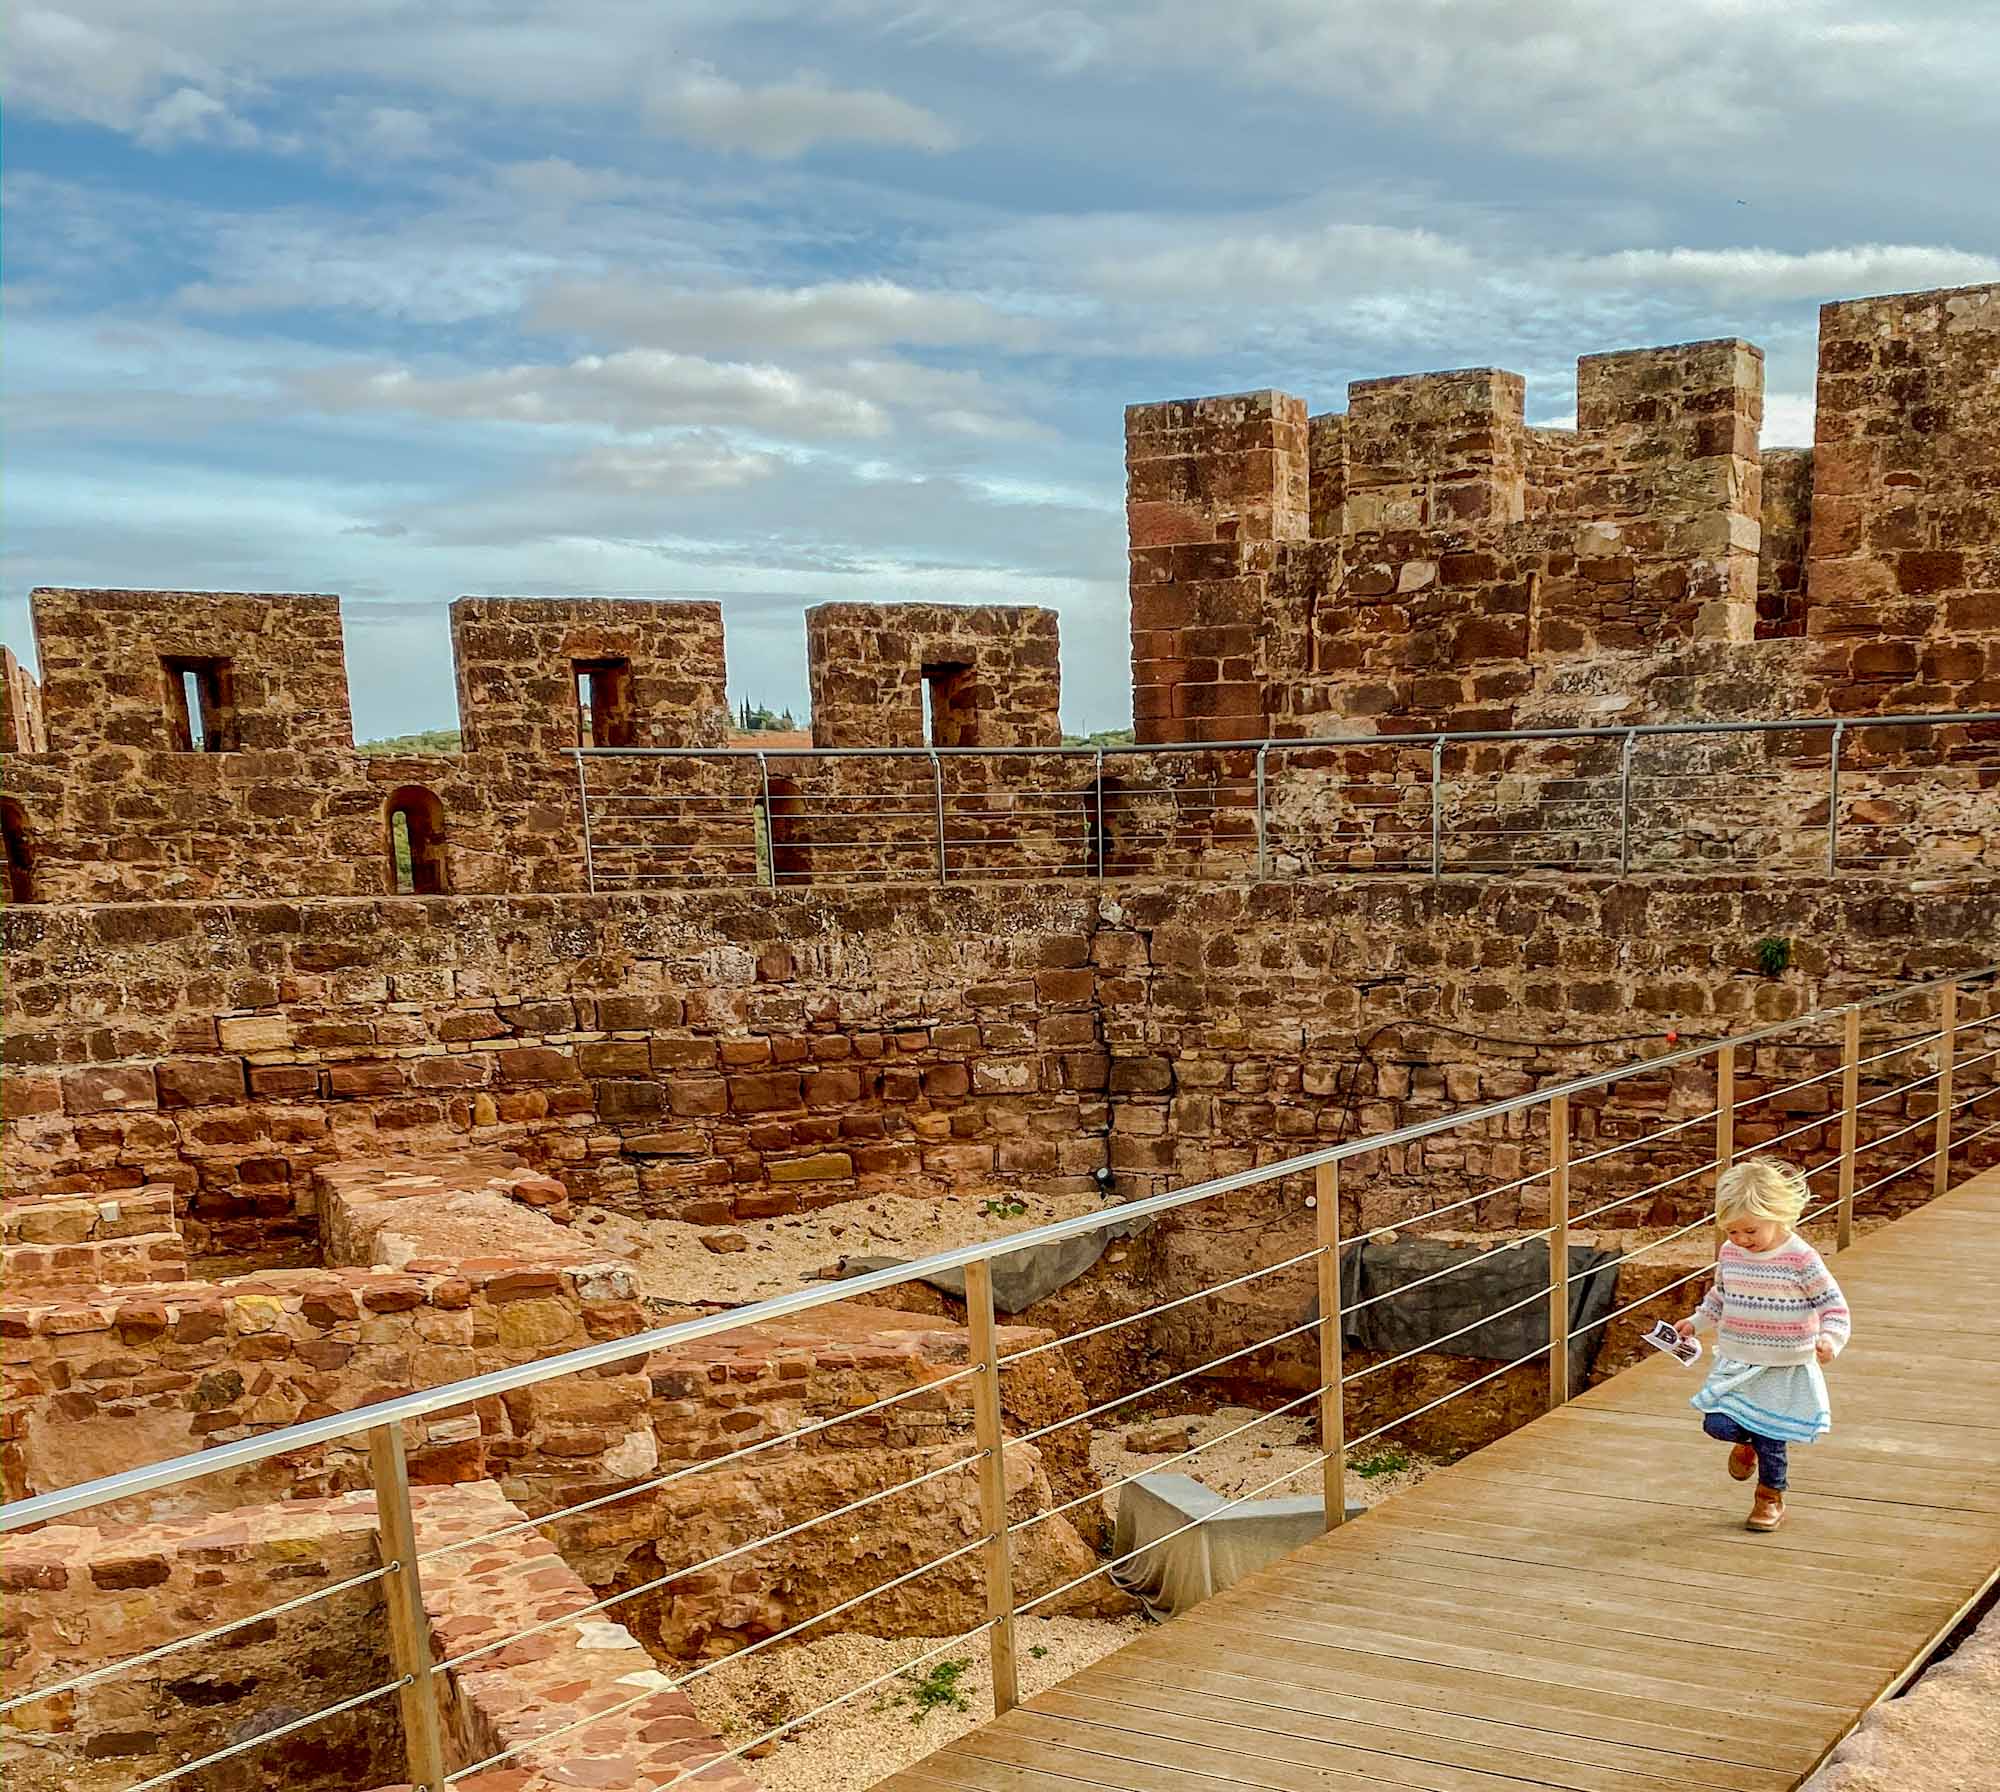 Young girl running along a boardwalk inside castle walls